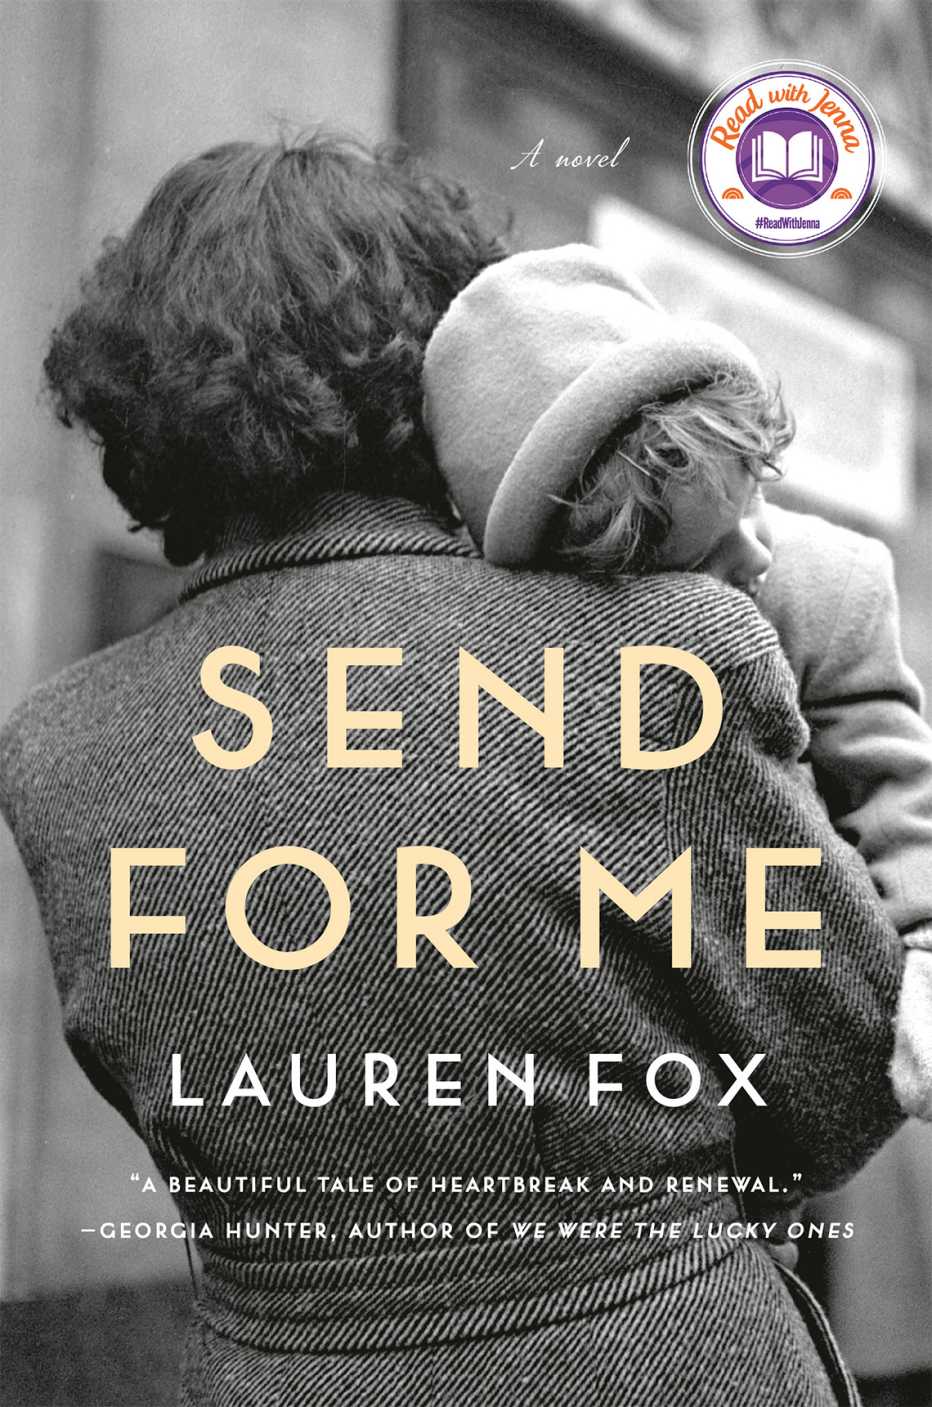 Portada del libro Send for Me de Lauren Fox.